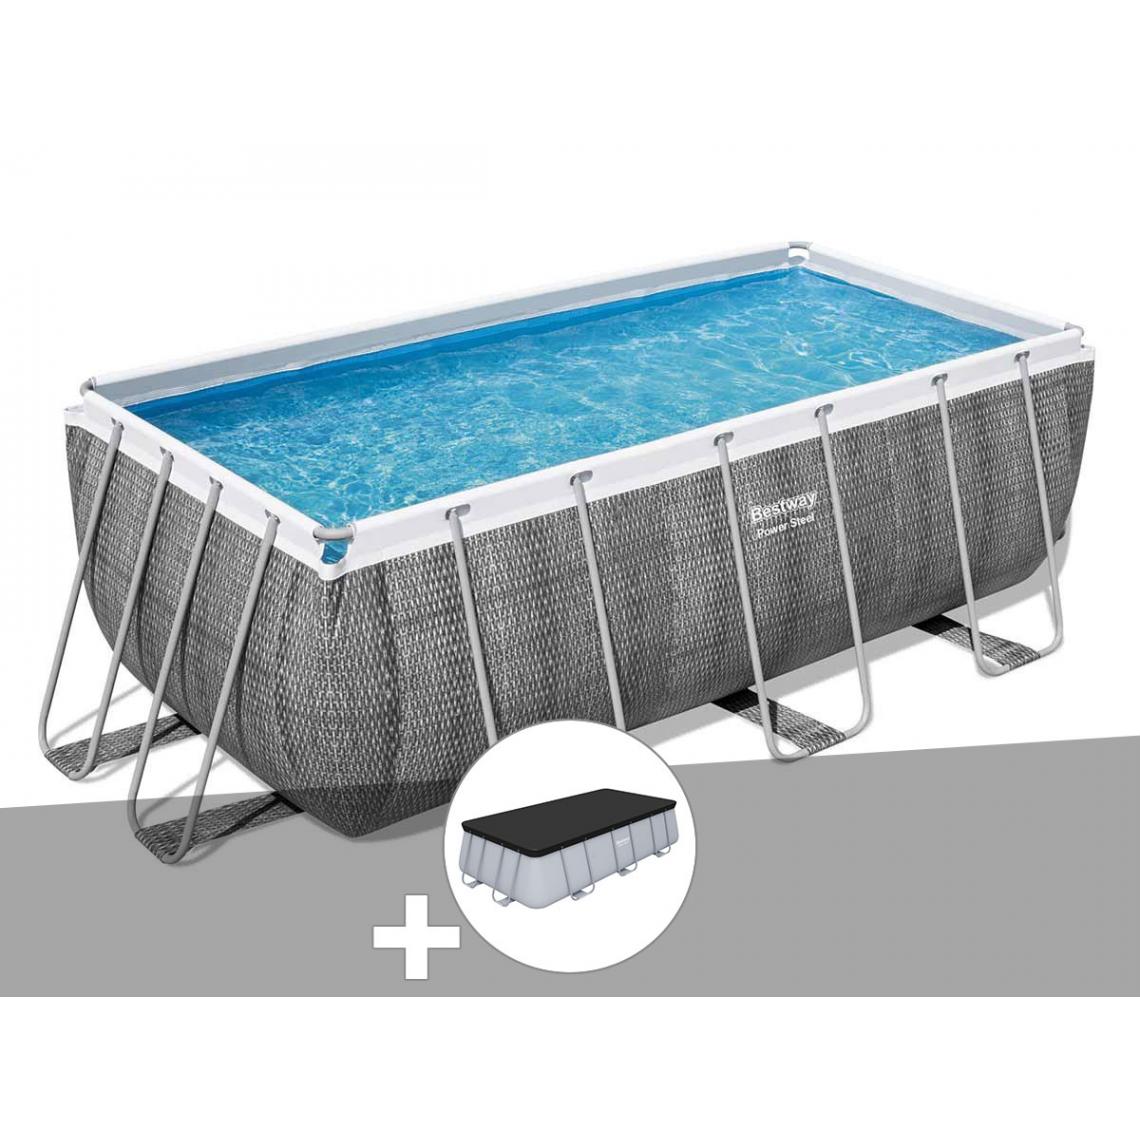 Bestway - Kit piscine tubulaire rectangulaire Bestway Power Steel 4,12 x 2,01 x 1,22 m + Bâche de protection - Piscine Tubulaire